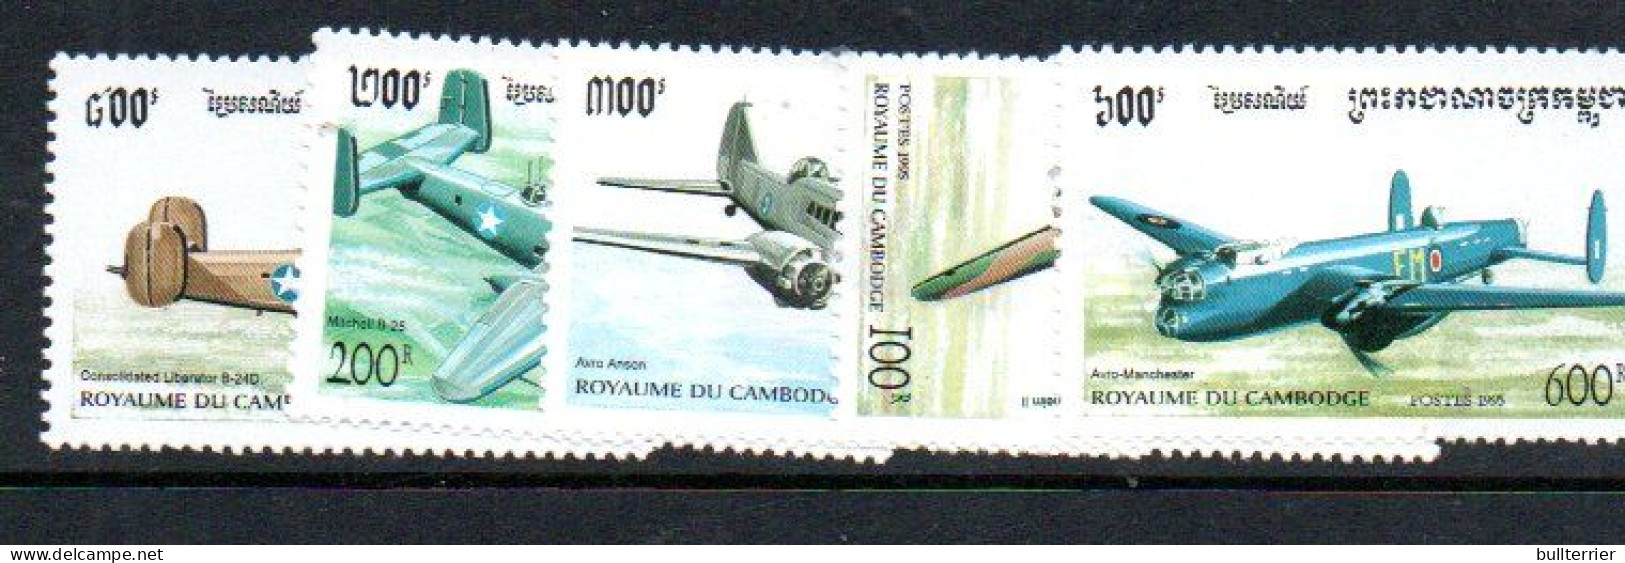 CAMBODIA - 1995 - WARPLANES SET OF 5  MINT NEVER HINGED - Cambodja